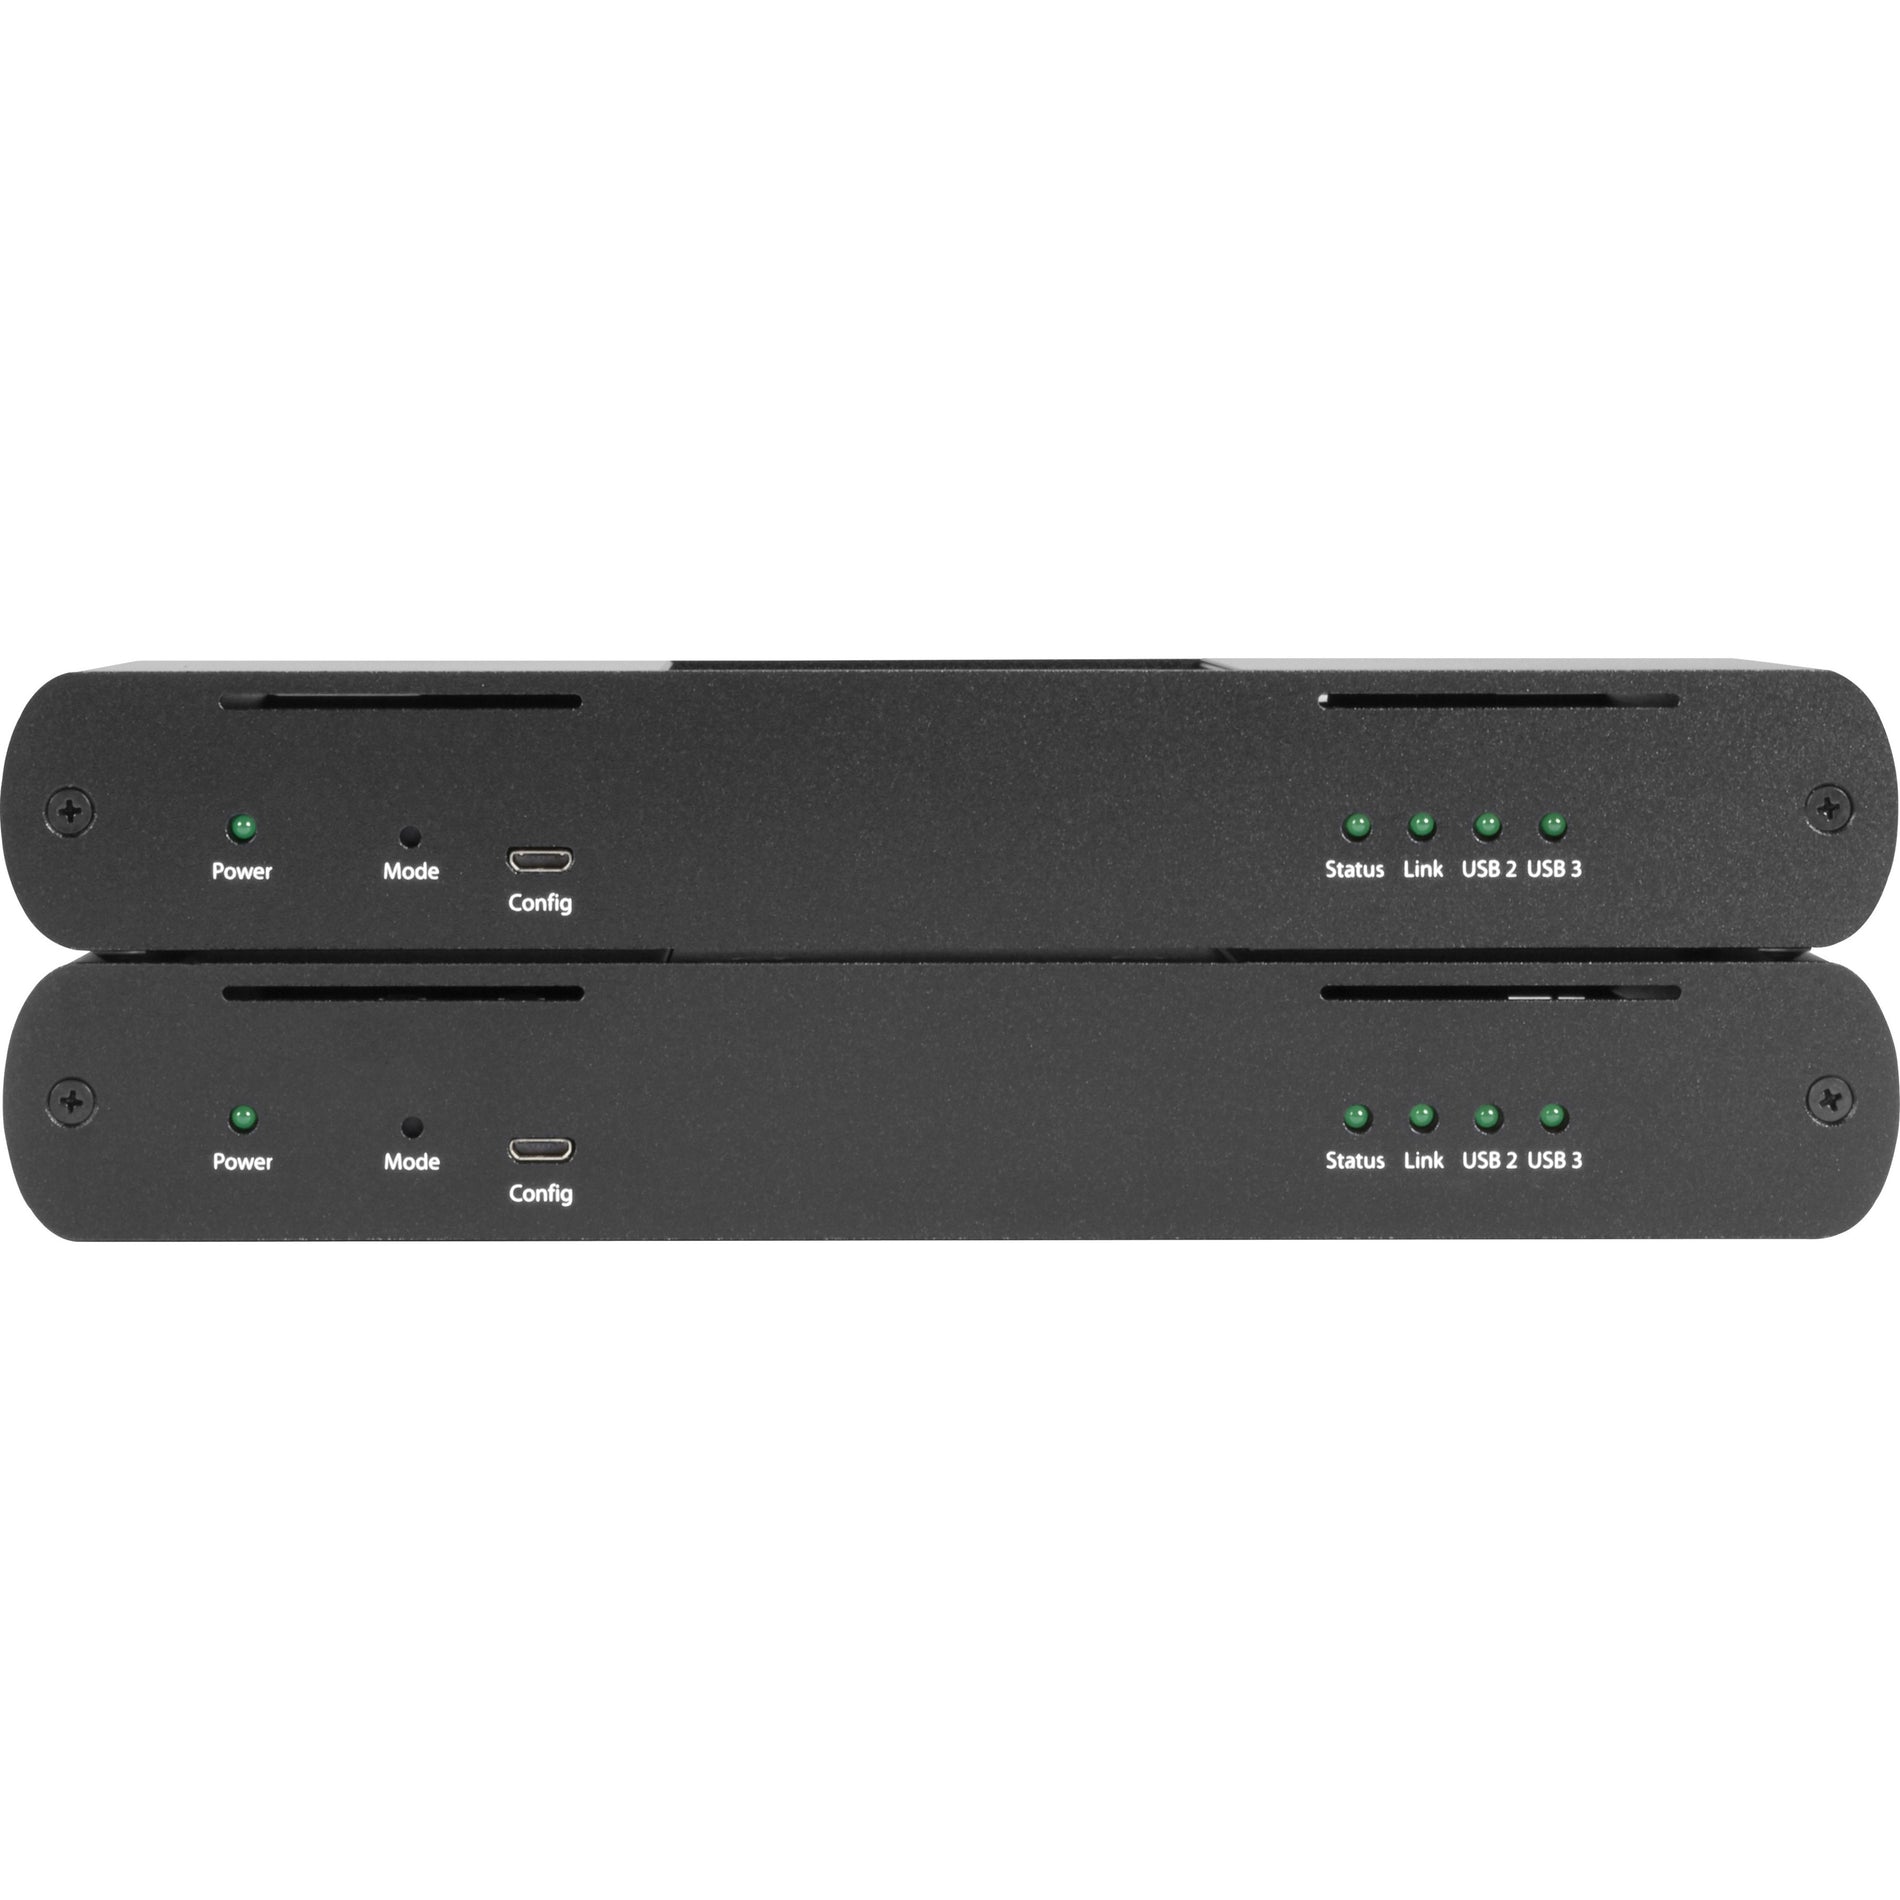 Black Box ICU504A USB 3.1 Extender over CATx - 4-Port, 328.08 ft Range, 640 MB/s Transfer Rate